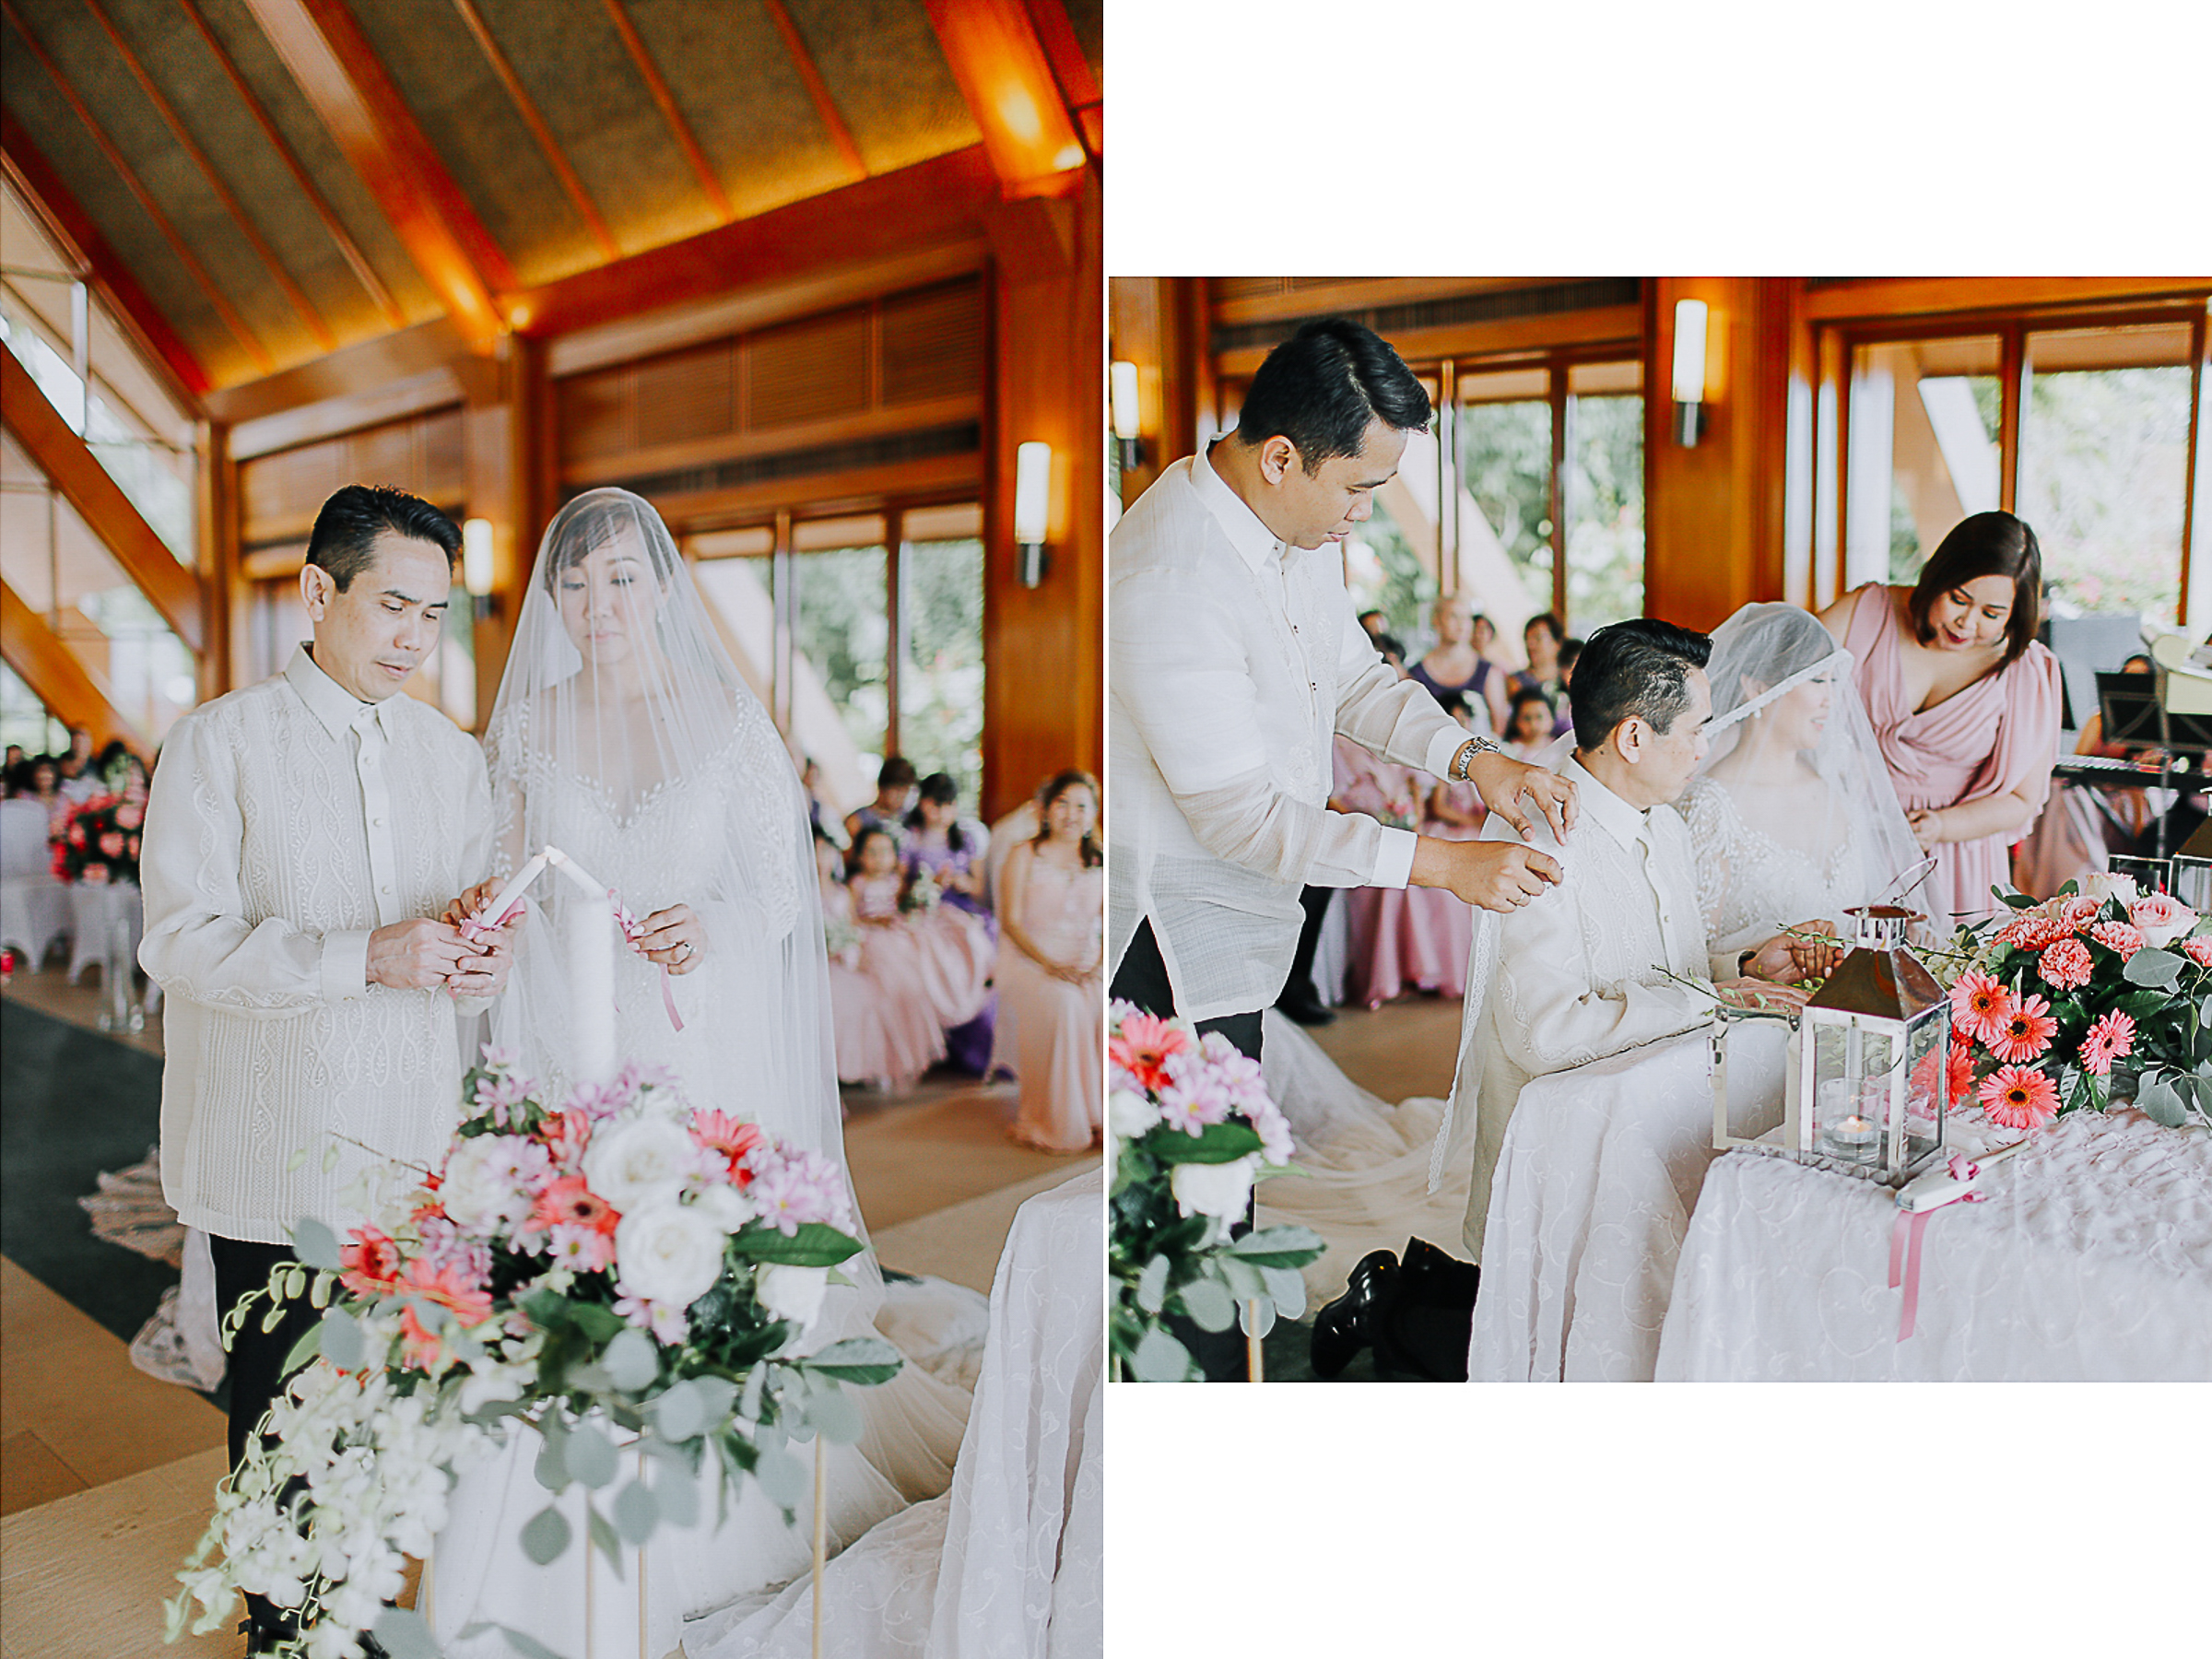 shang mactan wedding0046 - Coleen & Seigfred's Shangrila Mactan Cebu Destination Wedding